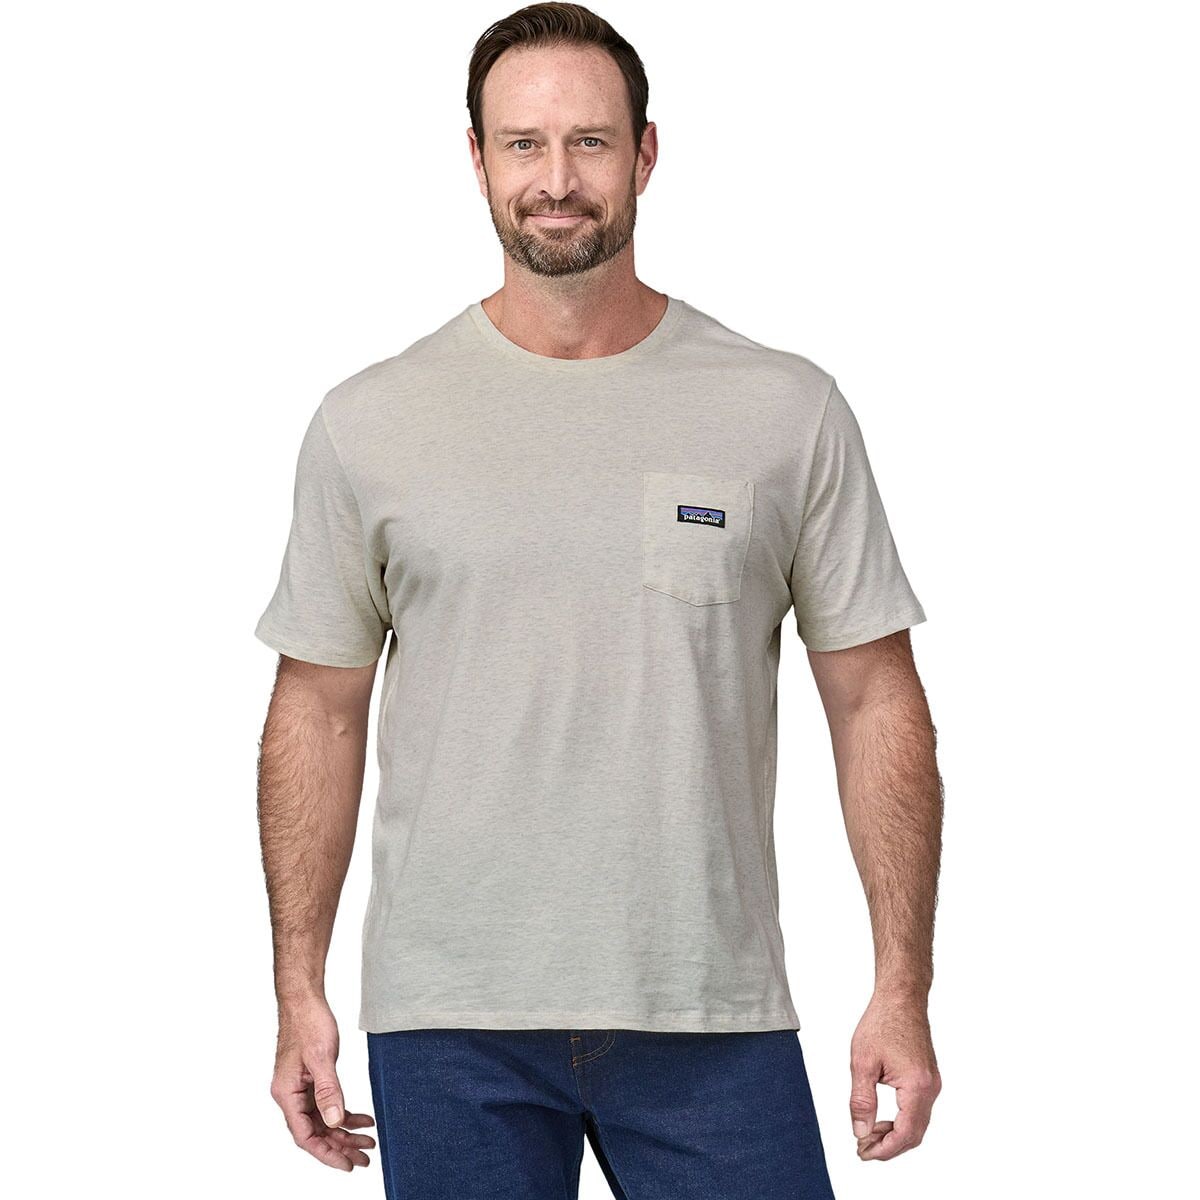 Patagonia Regenerative Organic Cotton Lightweight Pocket Shirt - Men's